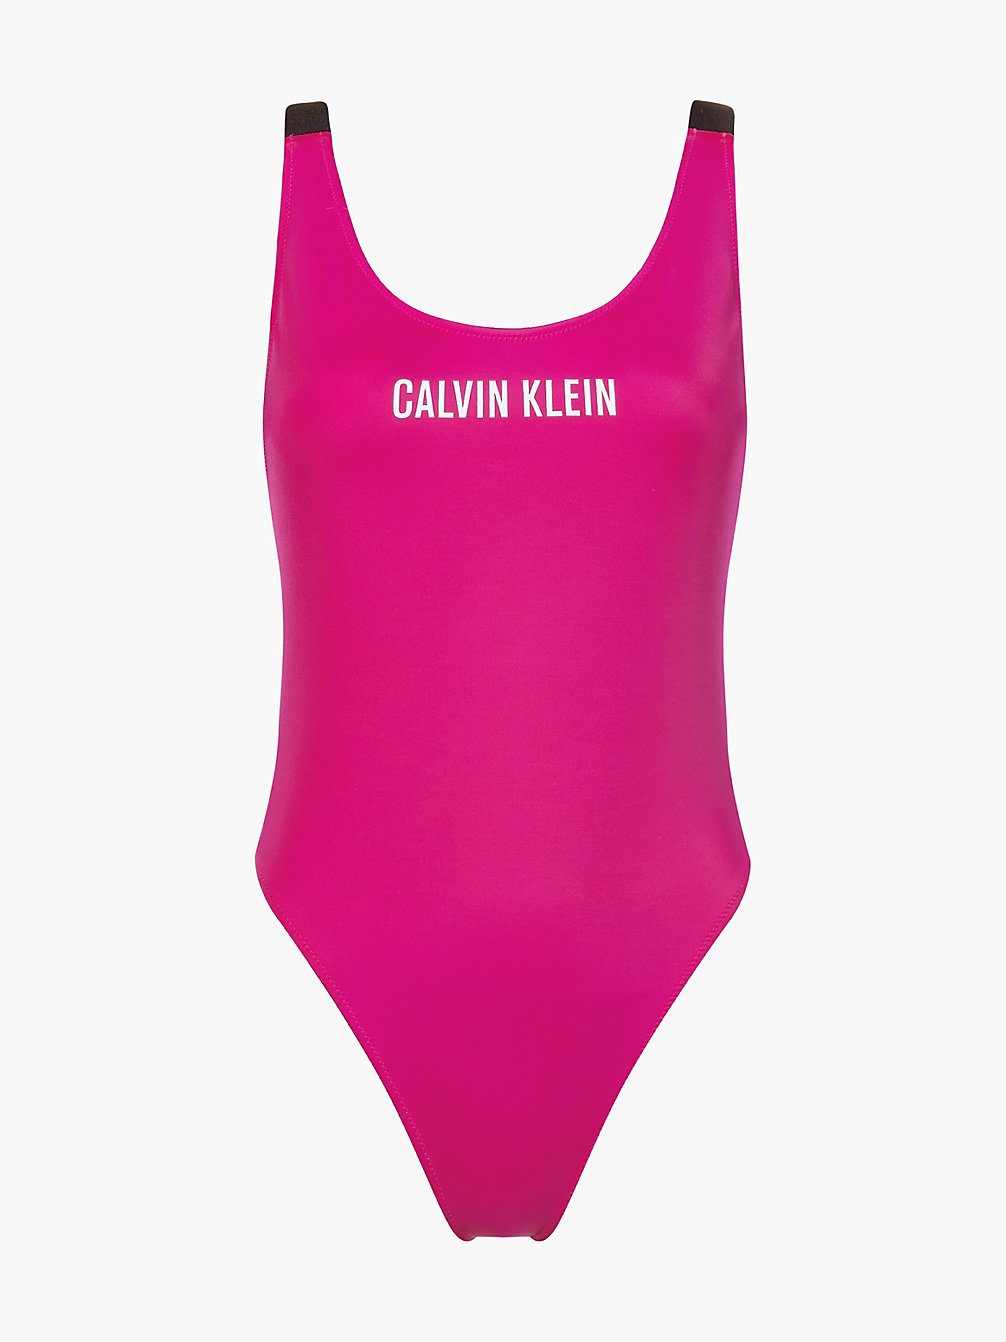 ROYAL PINK Scoop Neck Swimsuit - Intense Power undefined women Calvin Klein